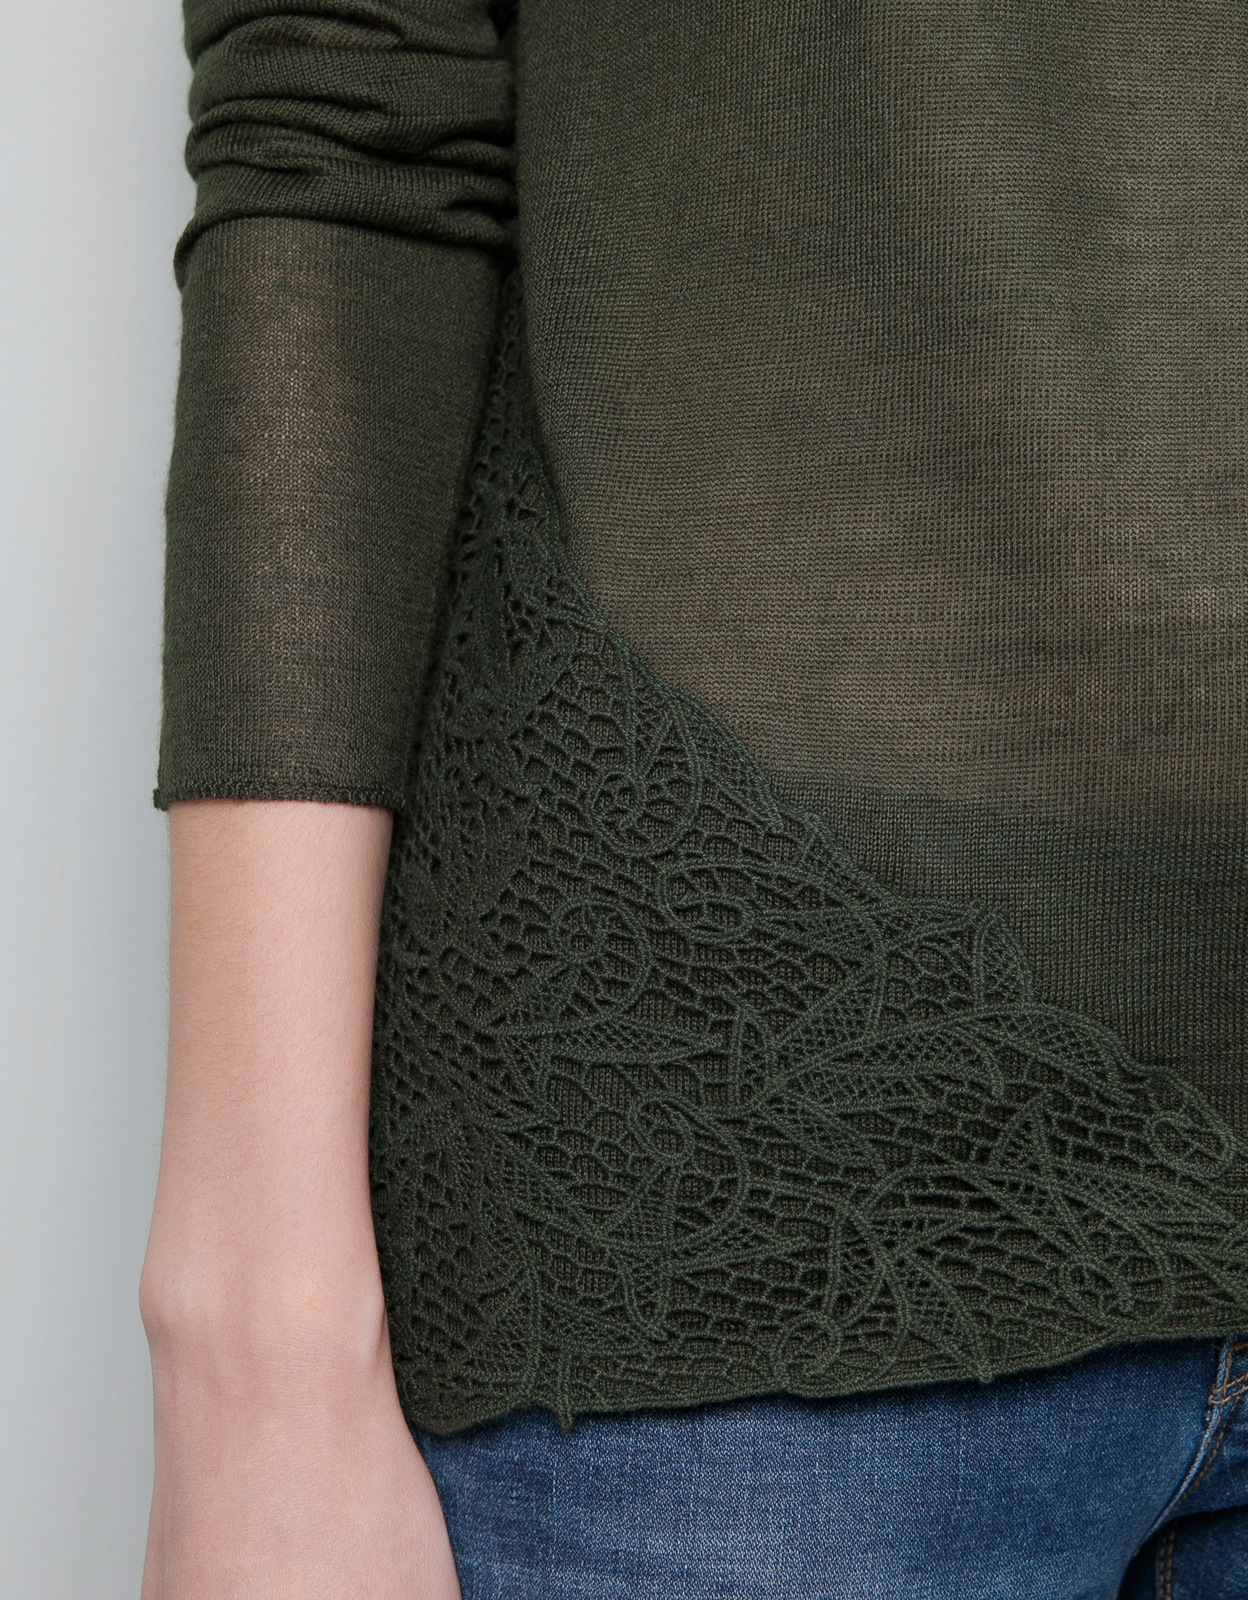 Zara olajzöld hosszú ujjú pulóver 2012.10.21 fotója